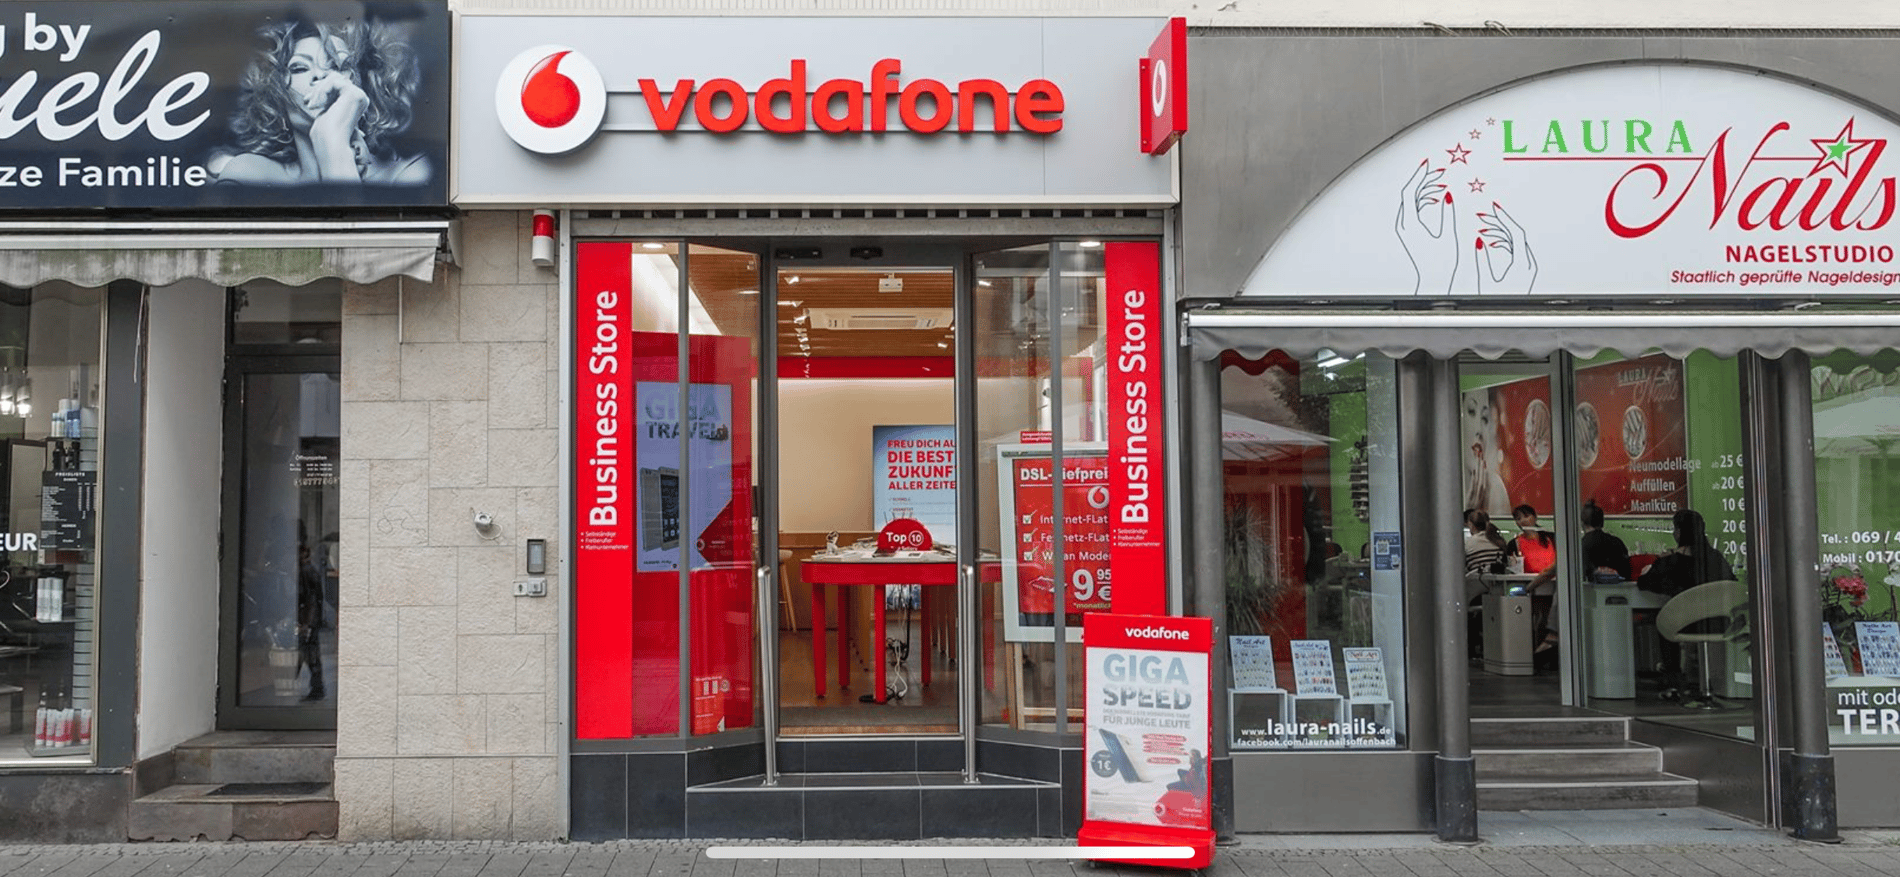 Vodafone-Shop in Offenbach, Frankfurter Str. 44